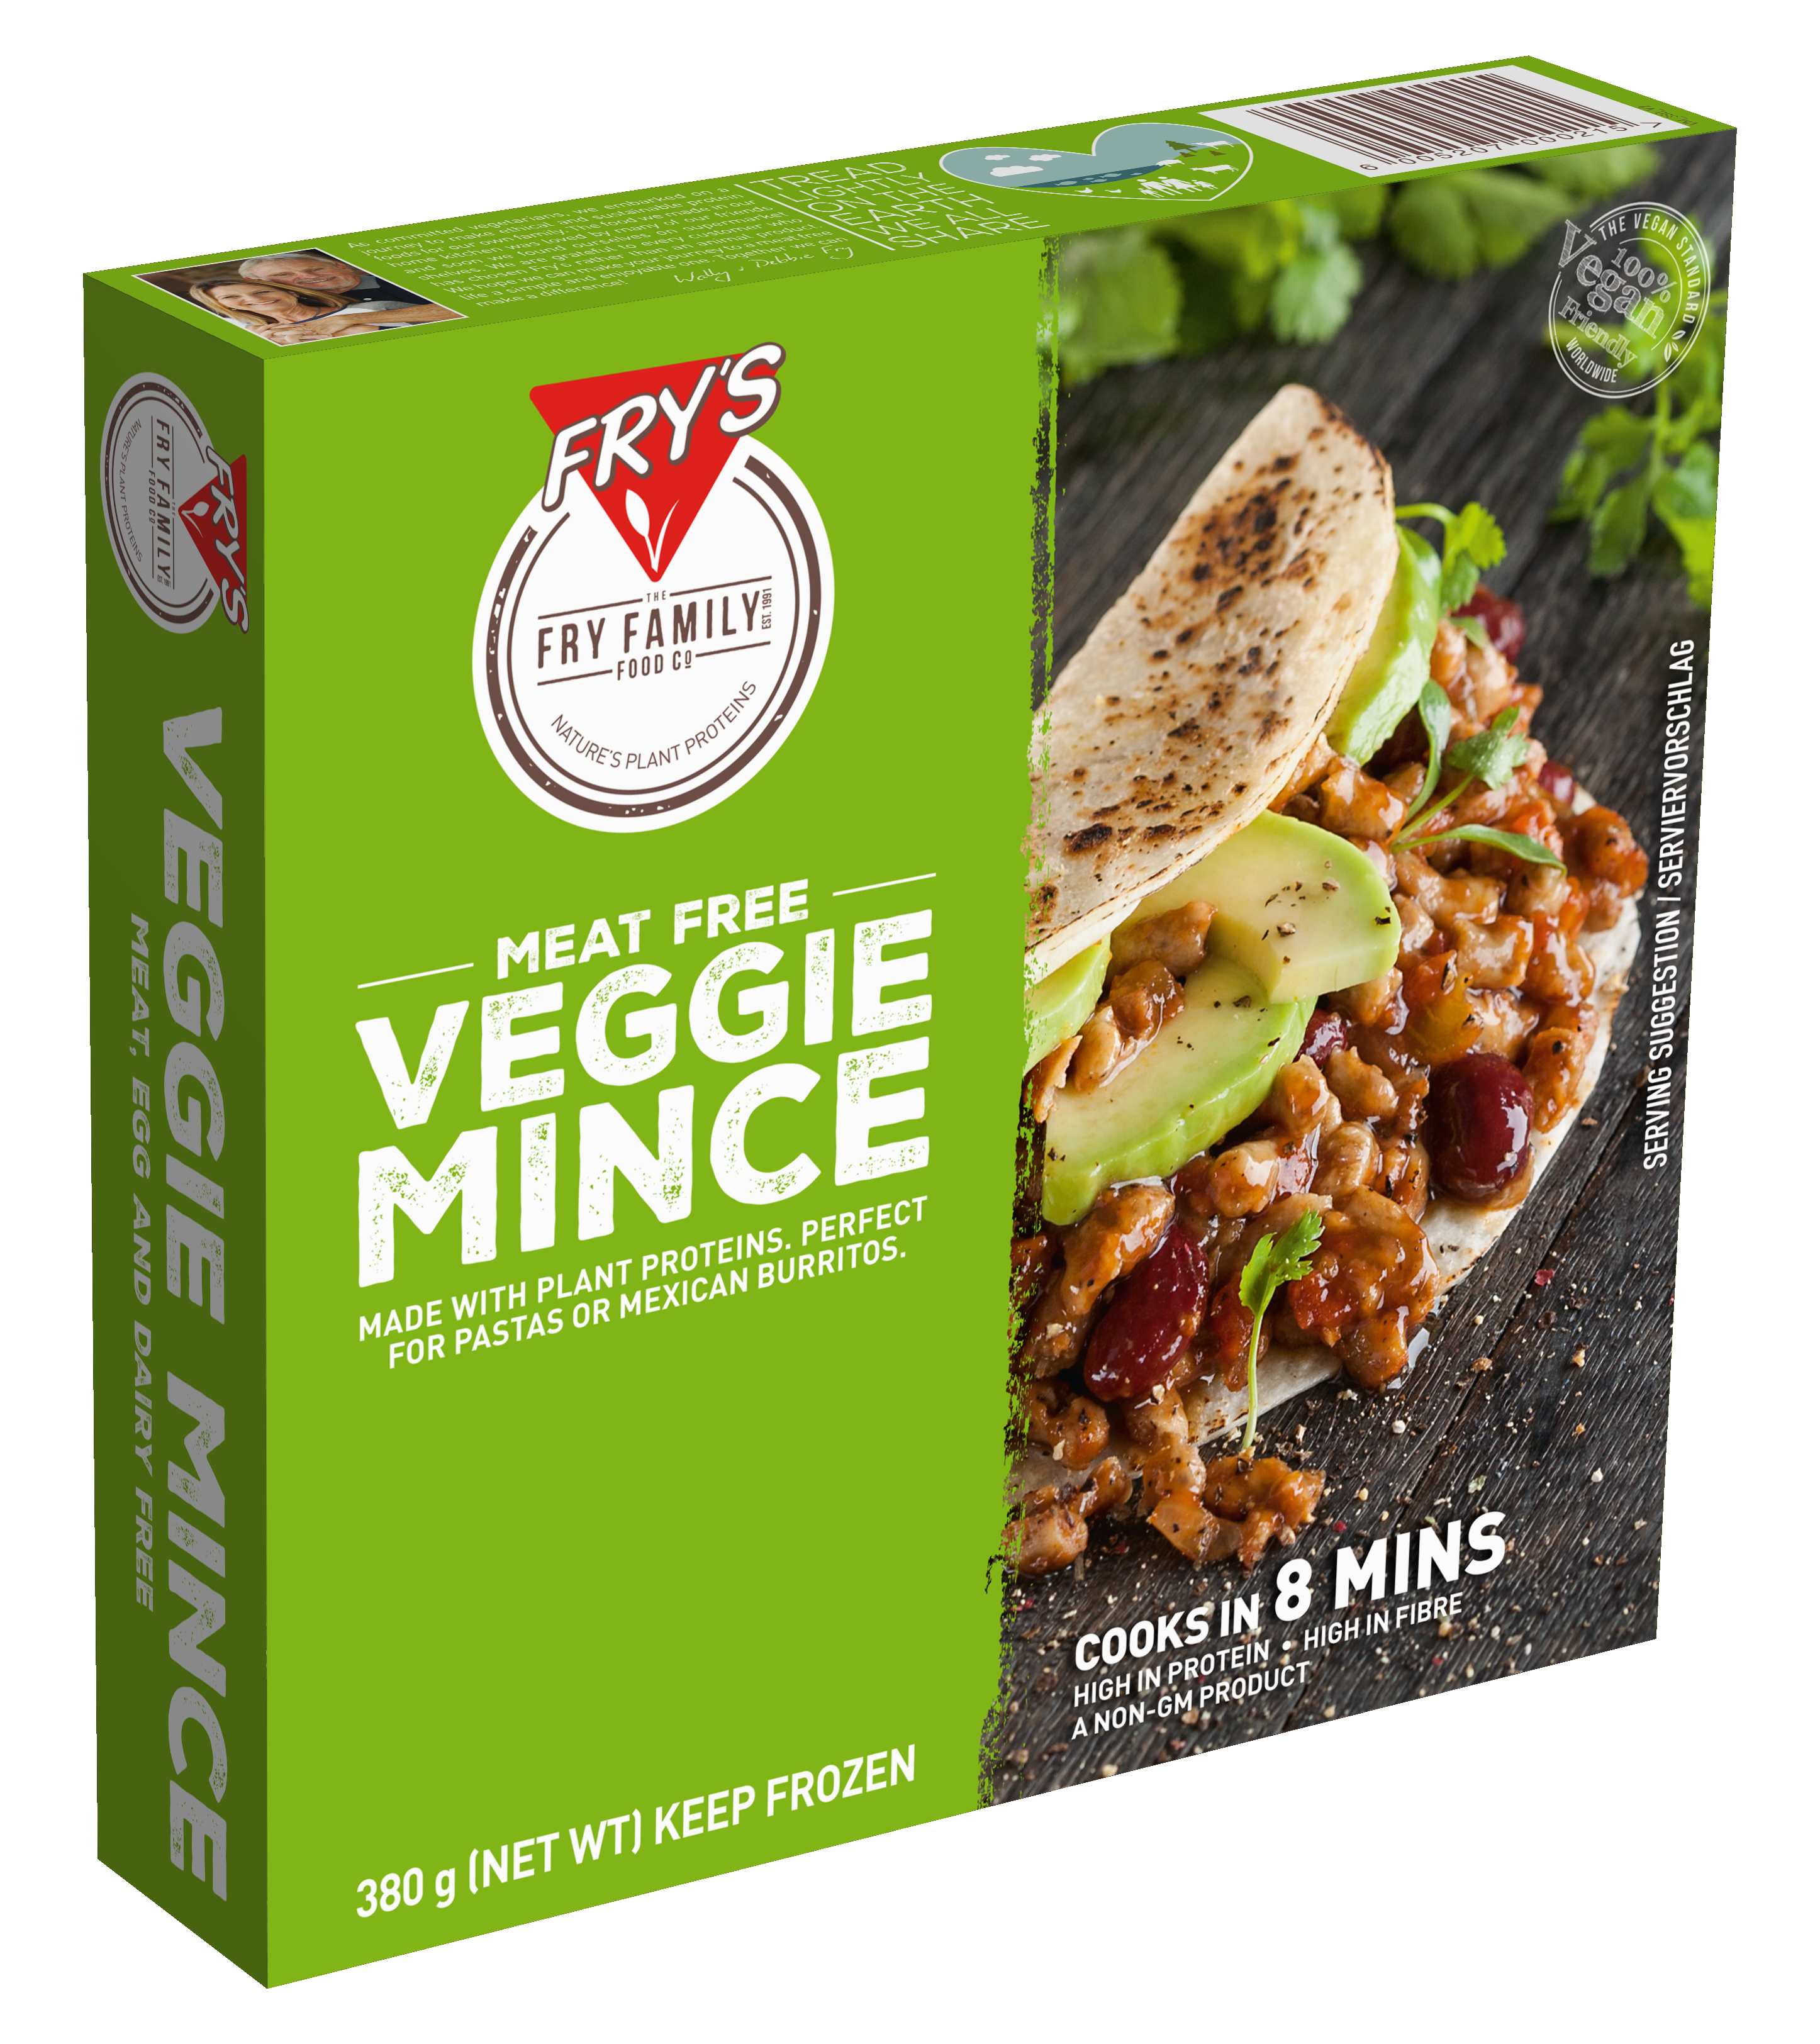 Meat free veggie mince 3D box